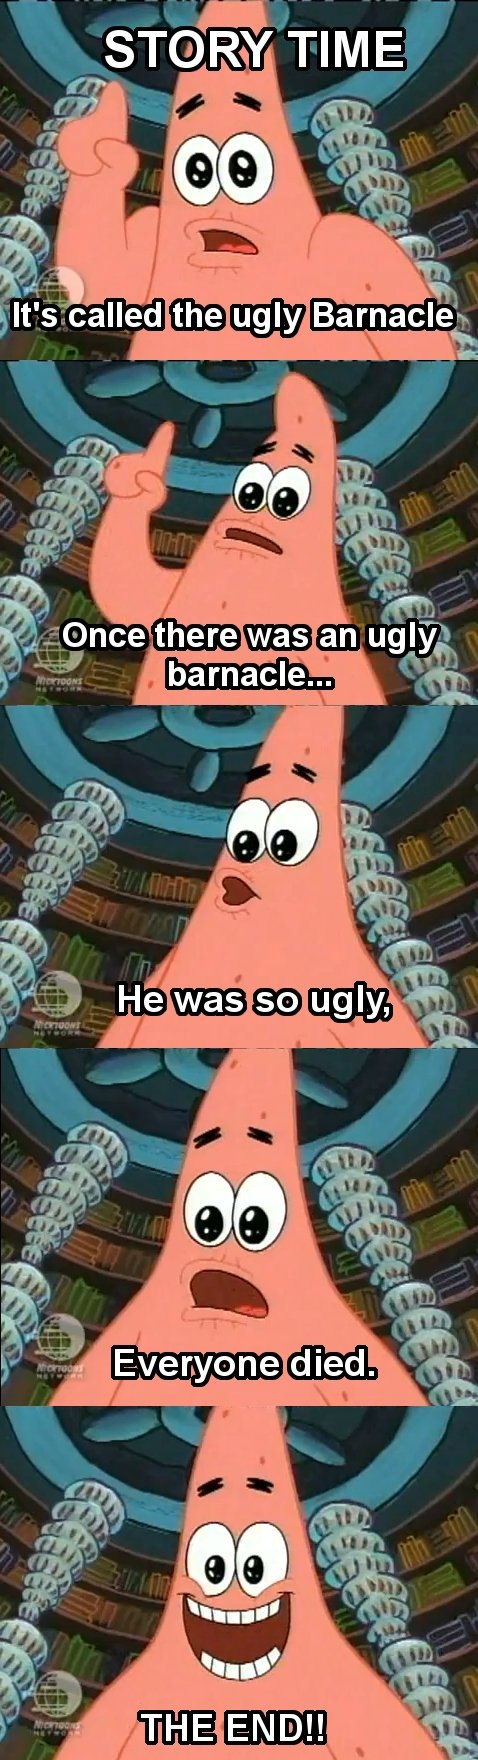 The Ugly Barnacle